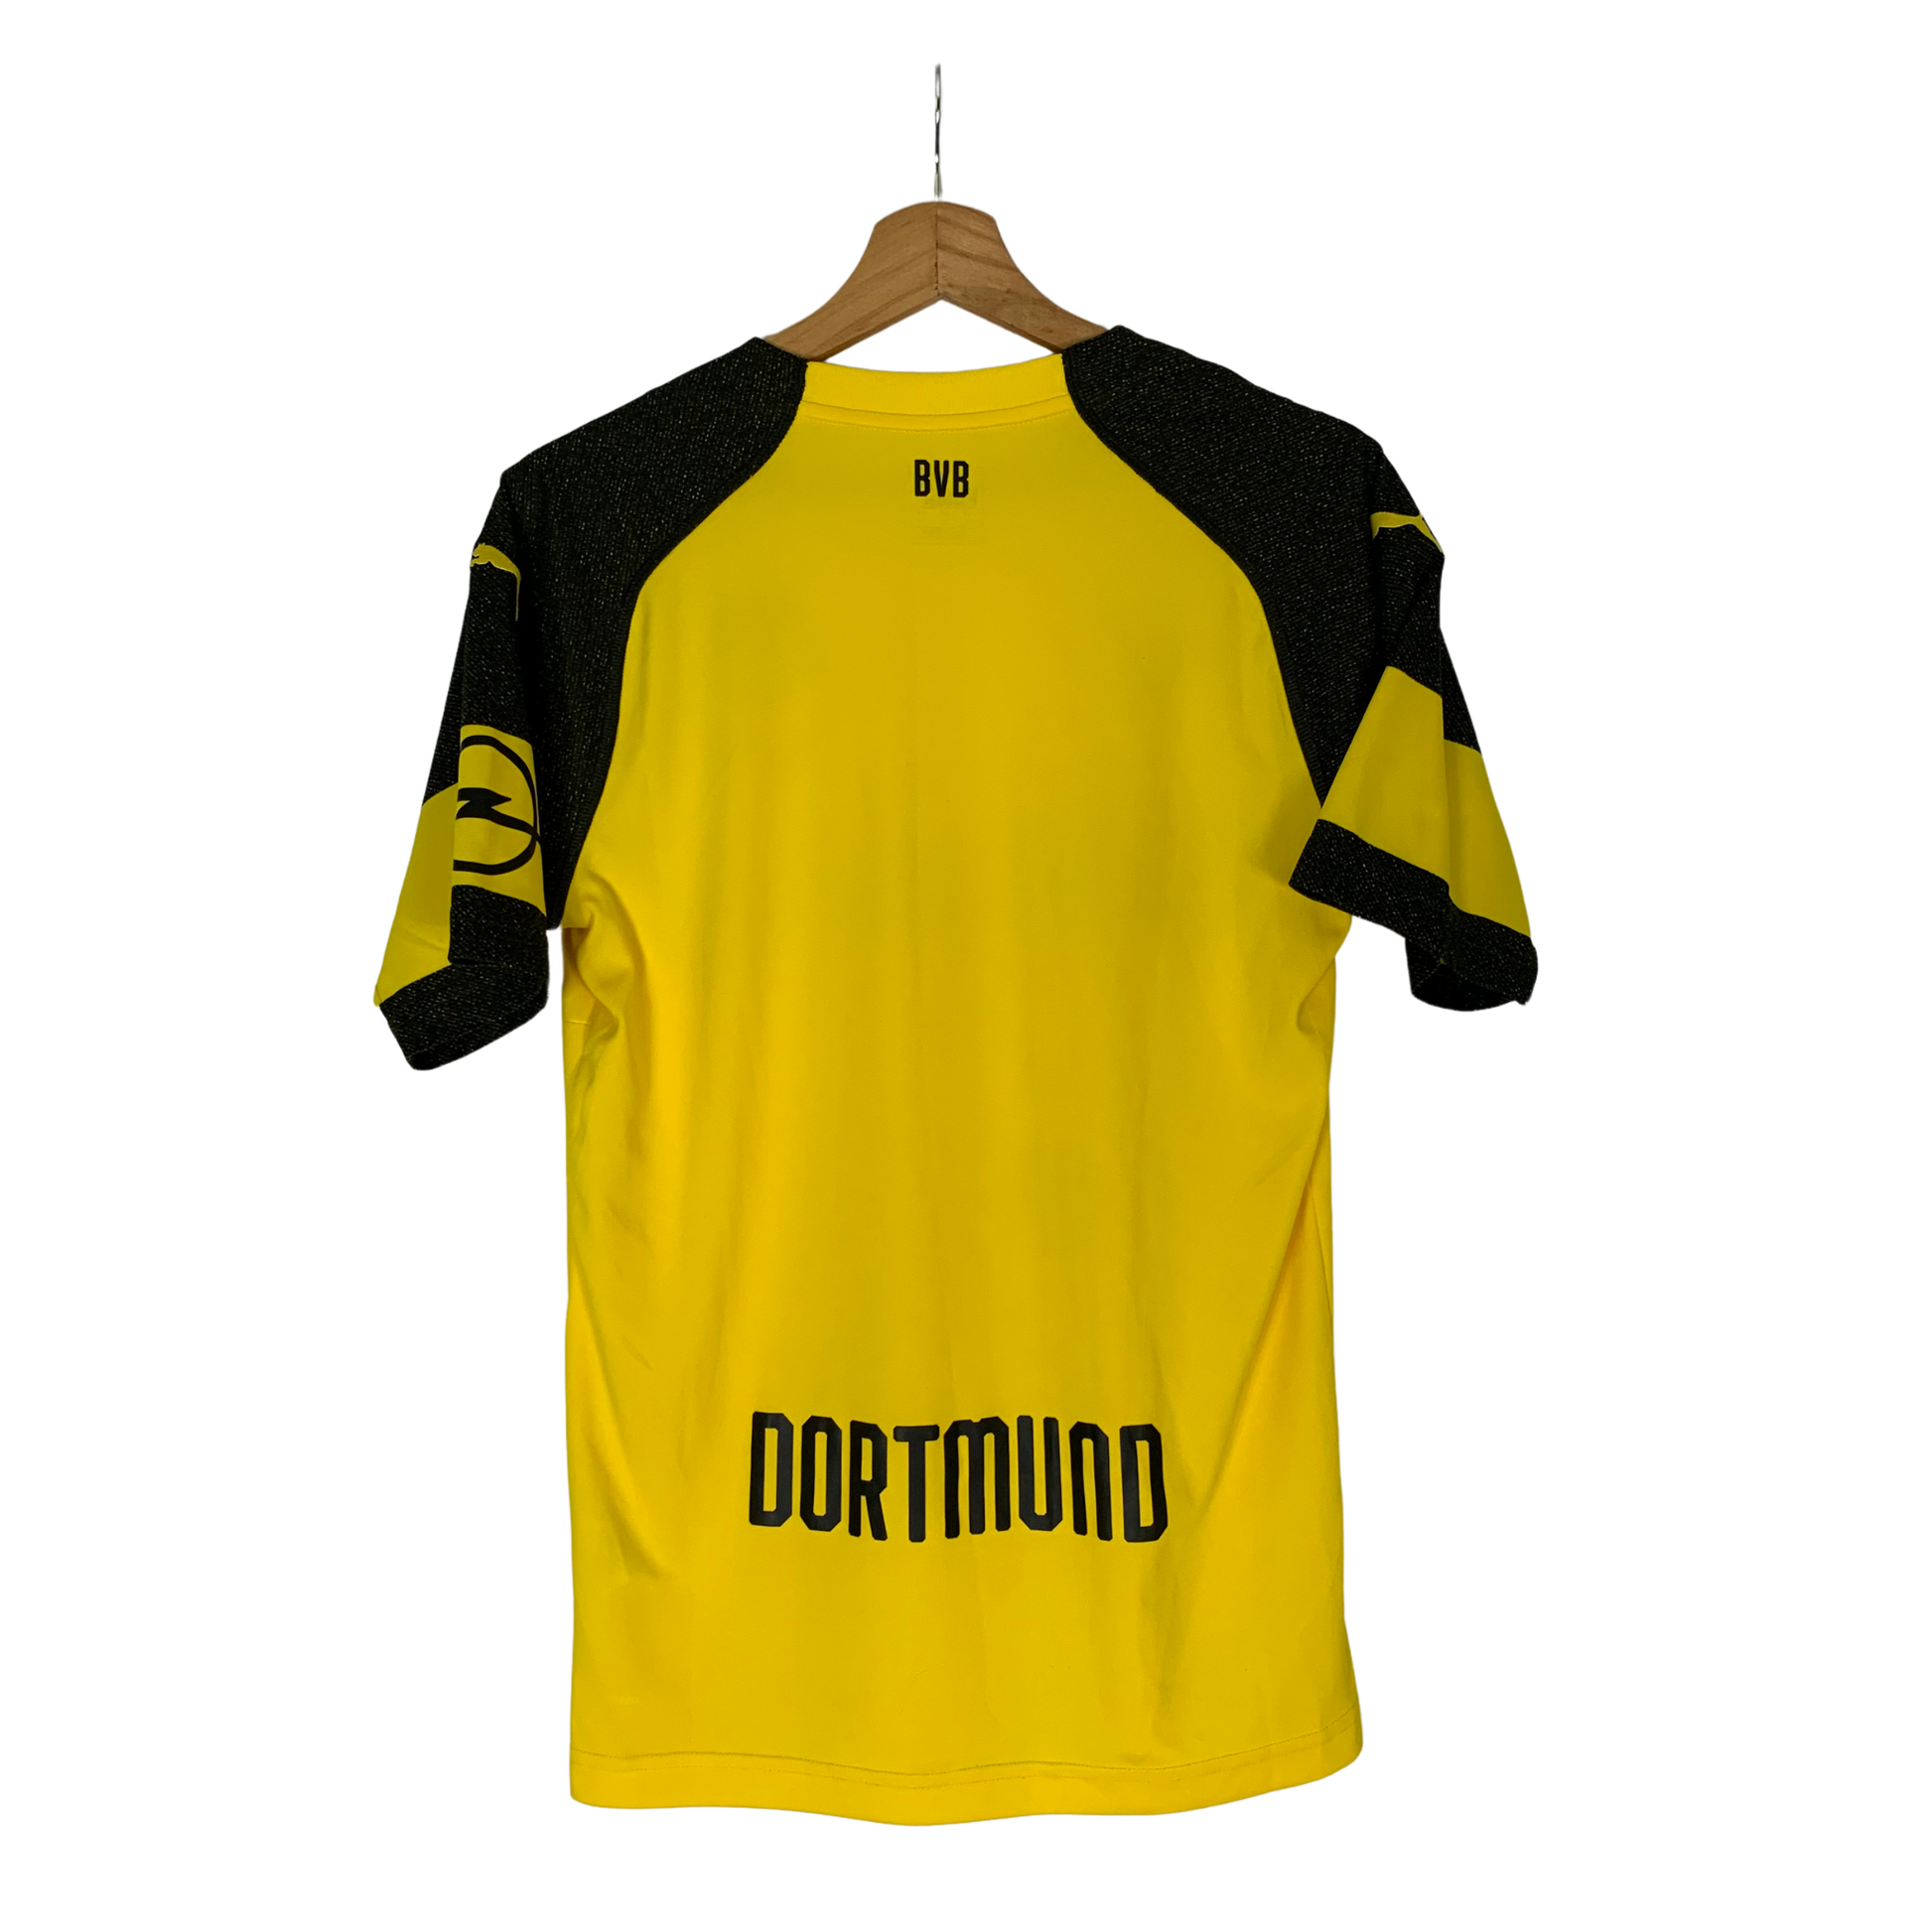 Classic Football Shirt Borussia Dortmund season 2018-2019 at InnoFoot